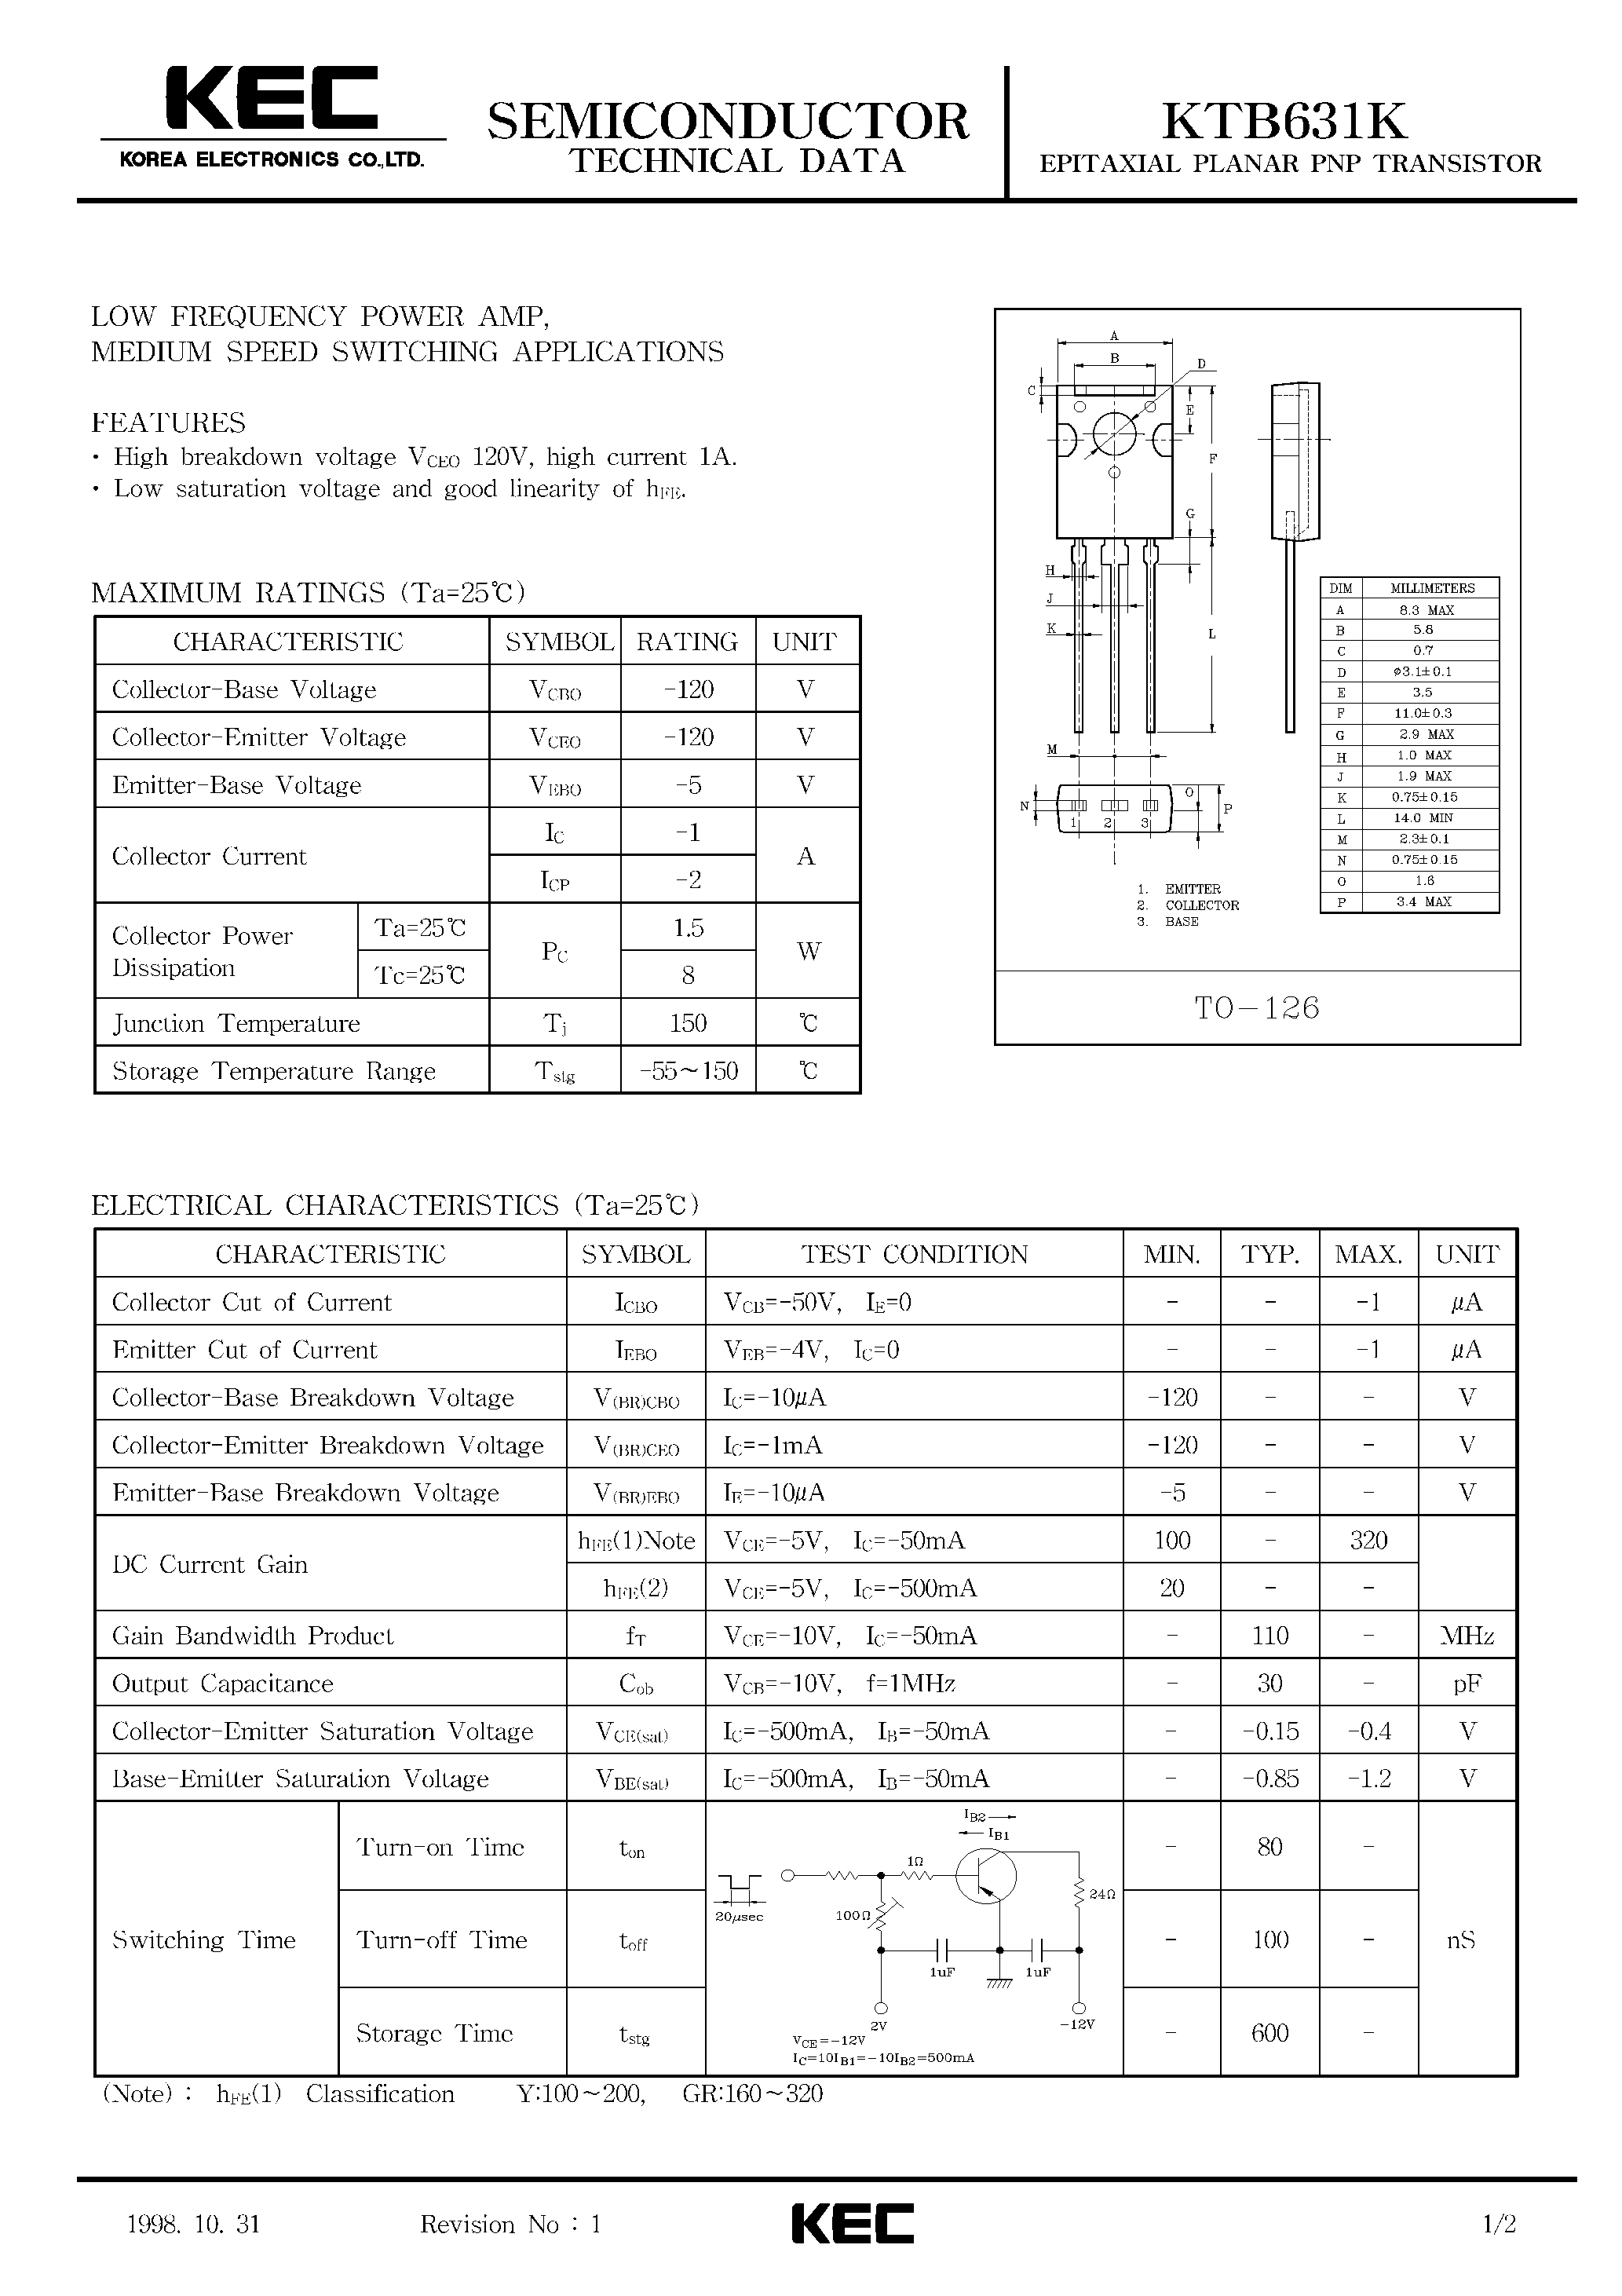 Datasheet KTB631K - EPITAXIAL PLANAR PNP TRANSISTOR (LOW FREQUENCY POWER AMP/ MEDIUM SPEED SWITCHING) page 1